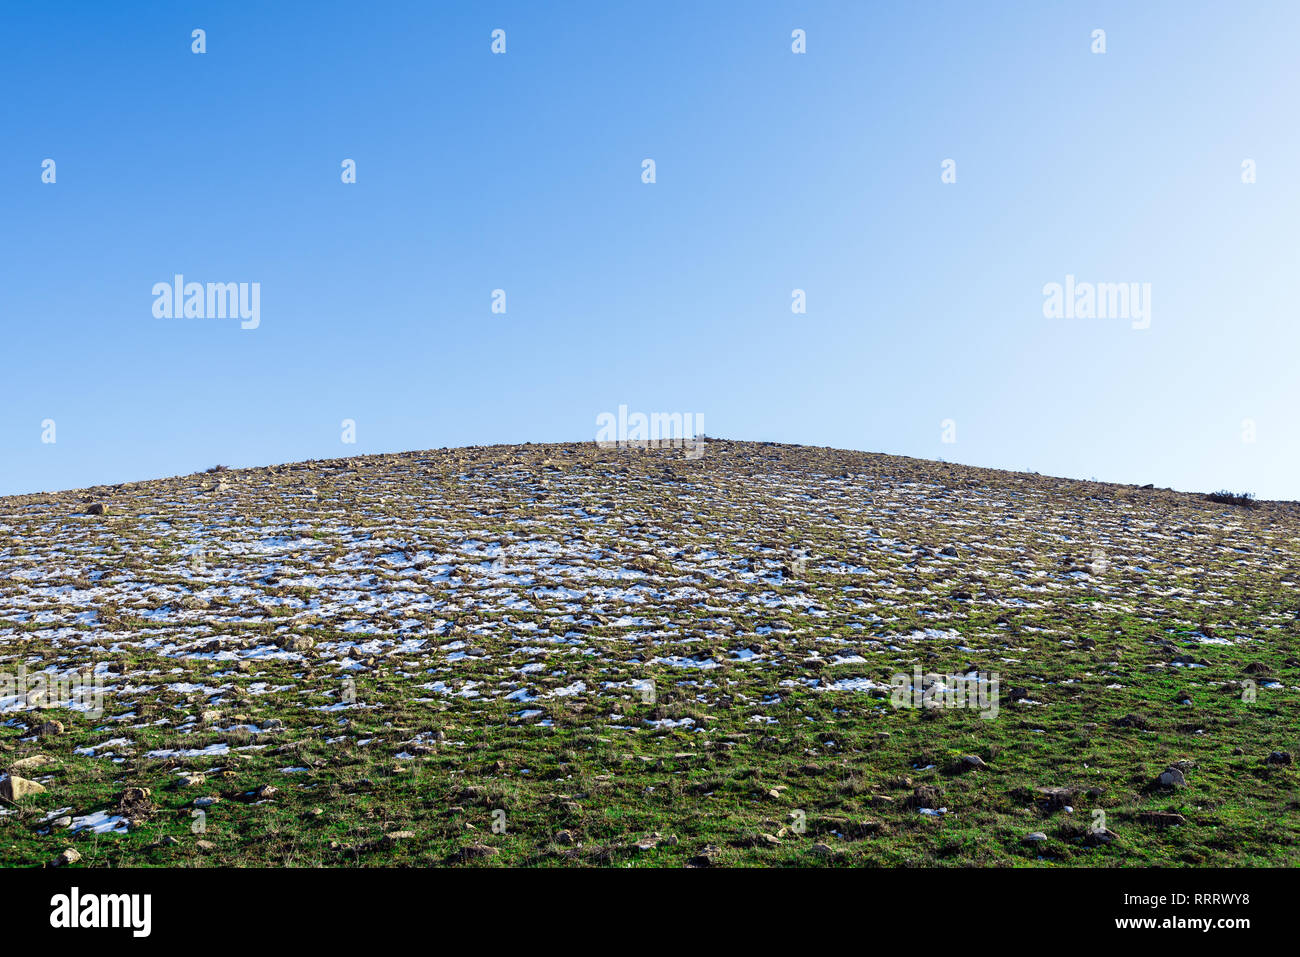 Snowy alpine Hügel mit spärlichem Gras Stockfoto